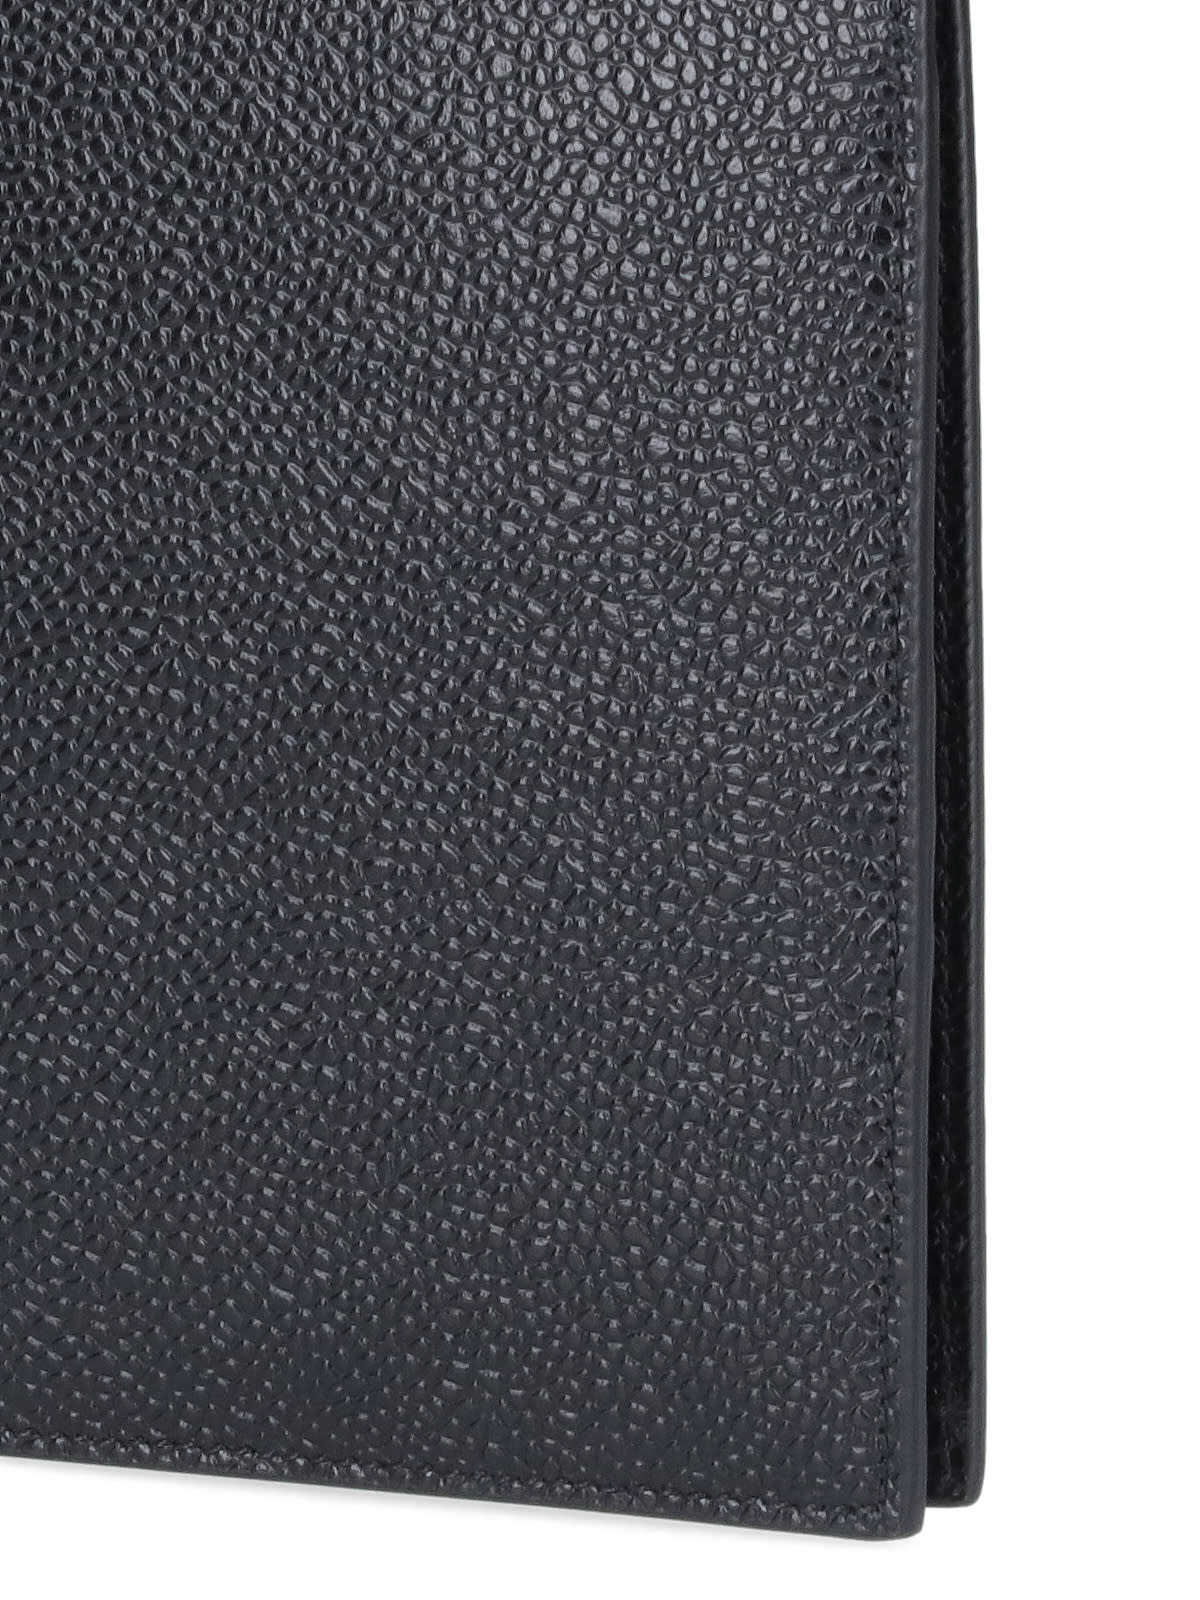 Shop Thom Browne Leather Passport Holder. In Black